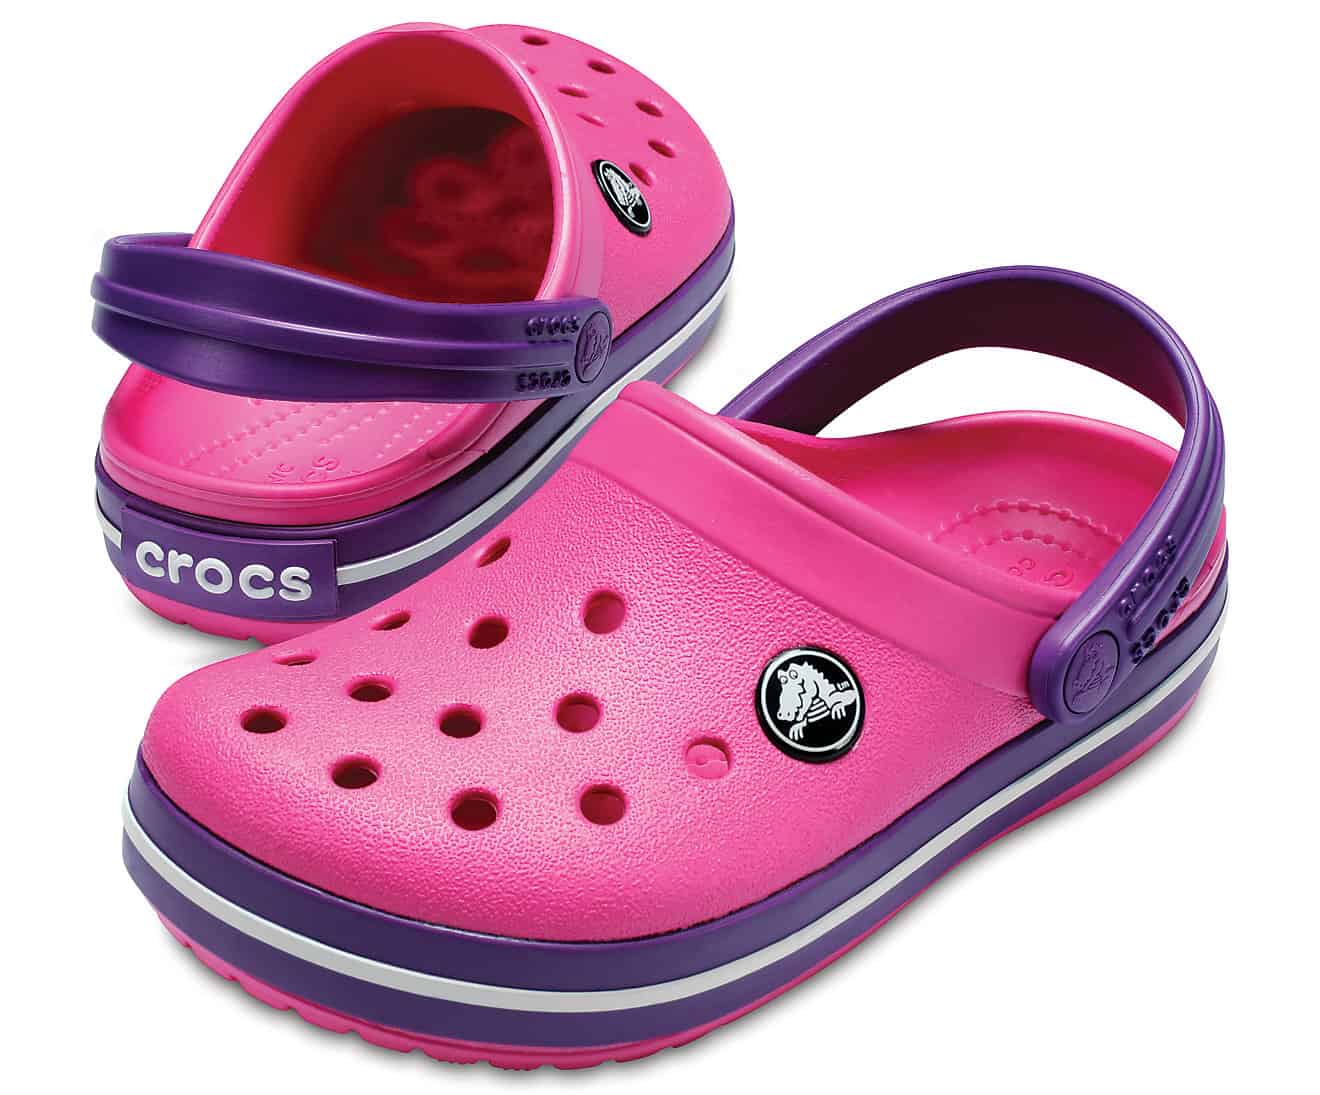  Crocs  Crocband Kids  Clog Paradise Pink Amethyst Eufraimidis